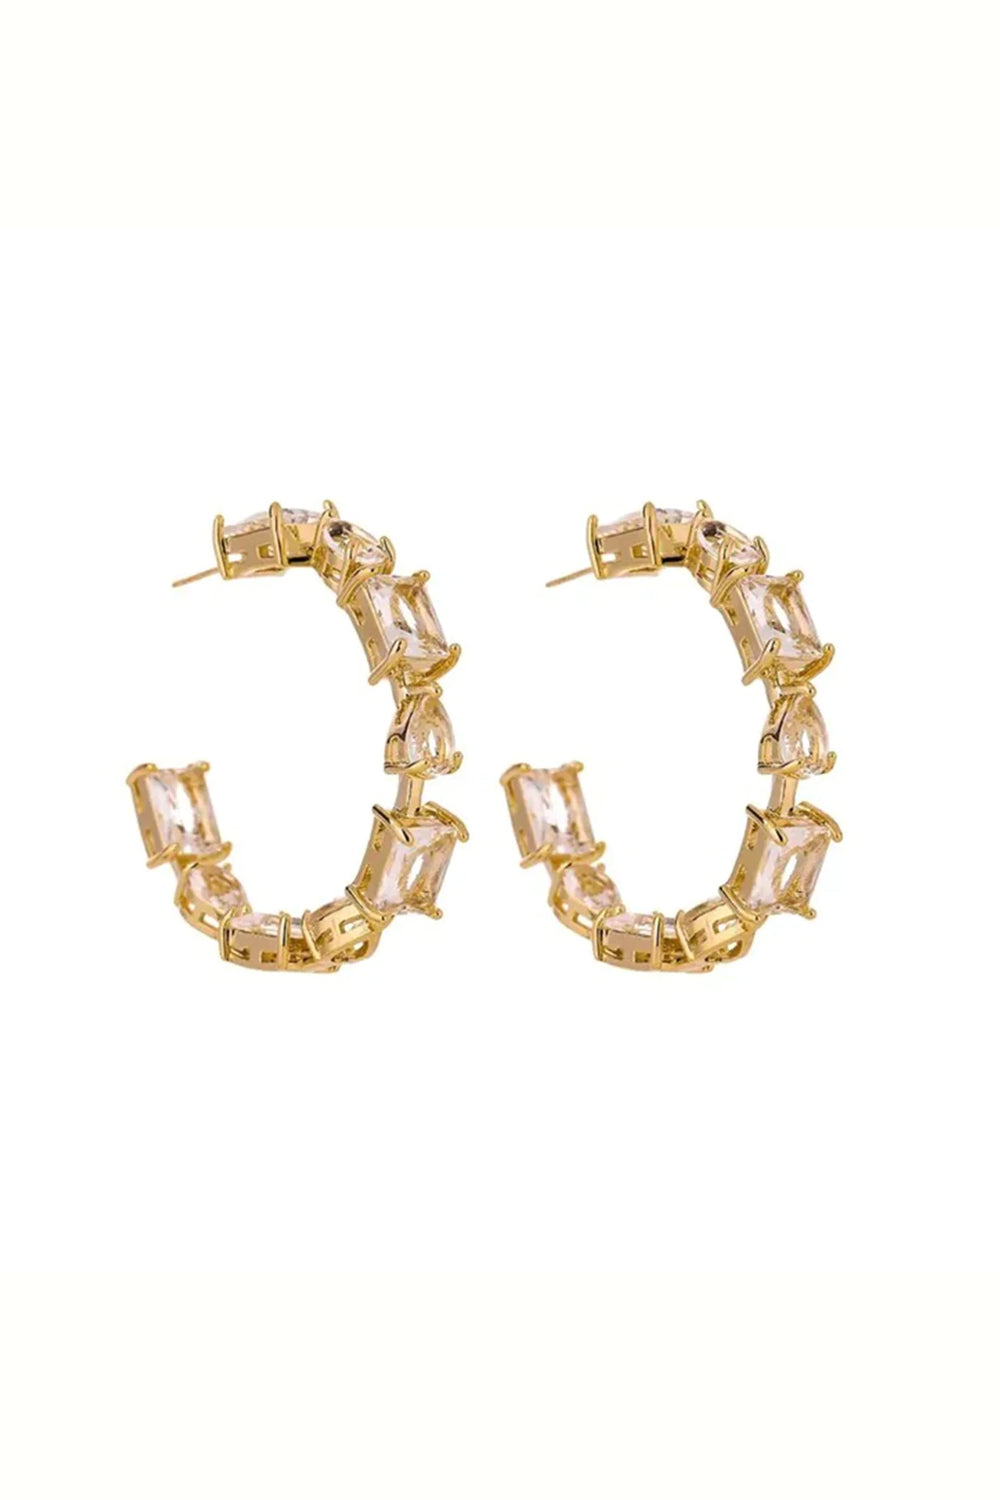 Gold Crystal Hoop Earrings for Women in Gold